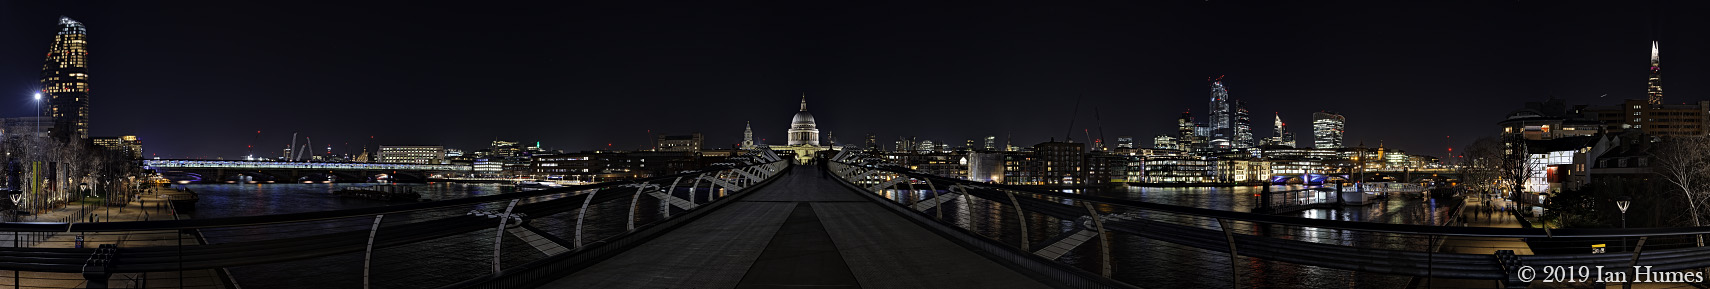 Millennium Bridge - City of London